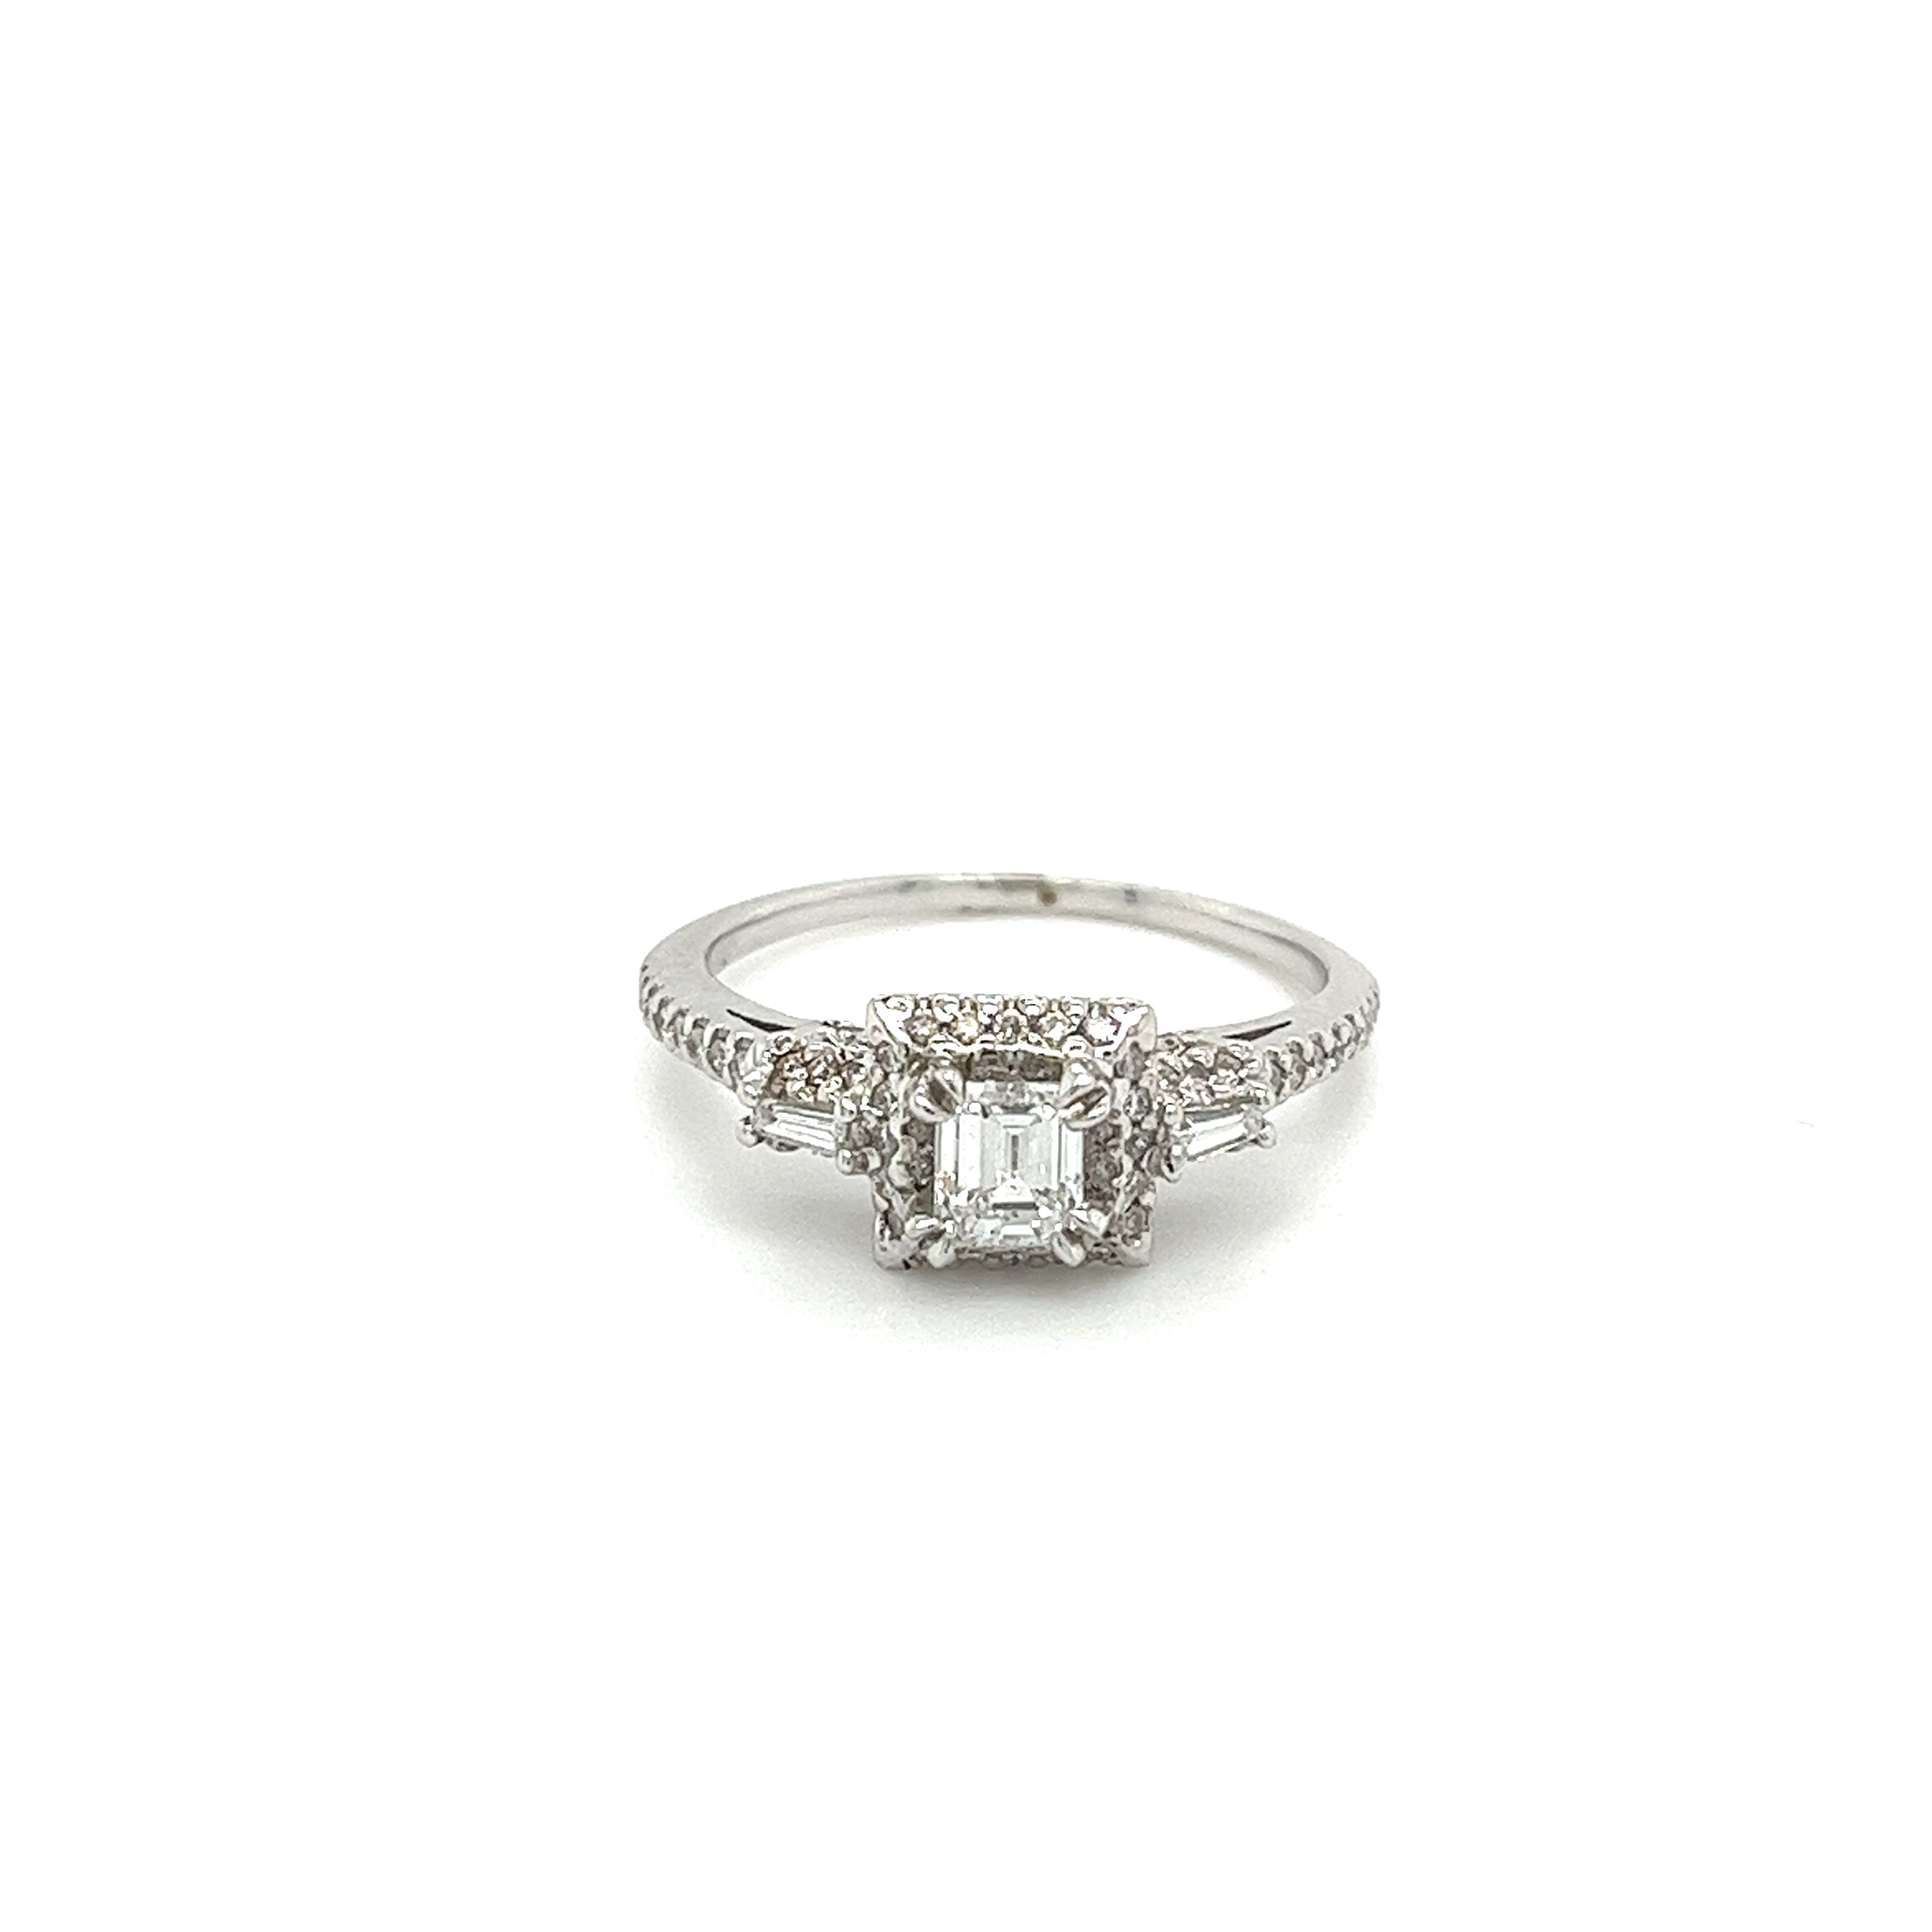 Vintage-Dainty-Emerald-Cut-Natural-Diamond-Ring-in-18K-White-Gold-Rings.jpg